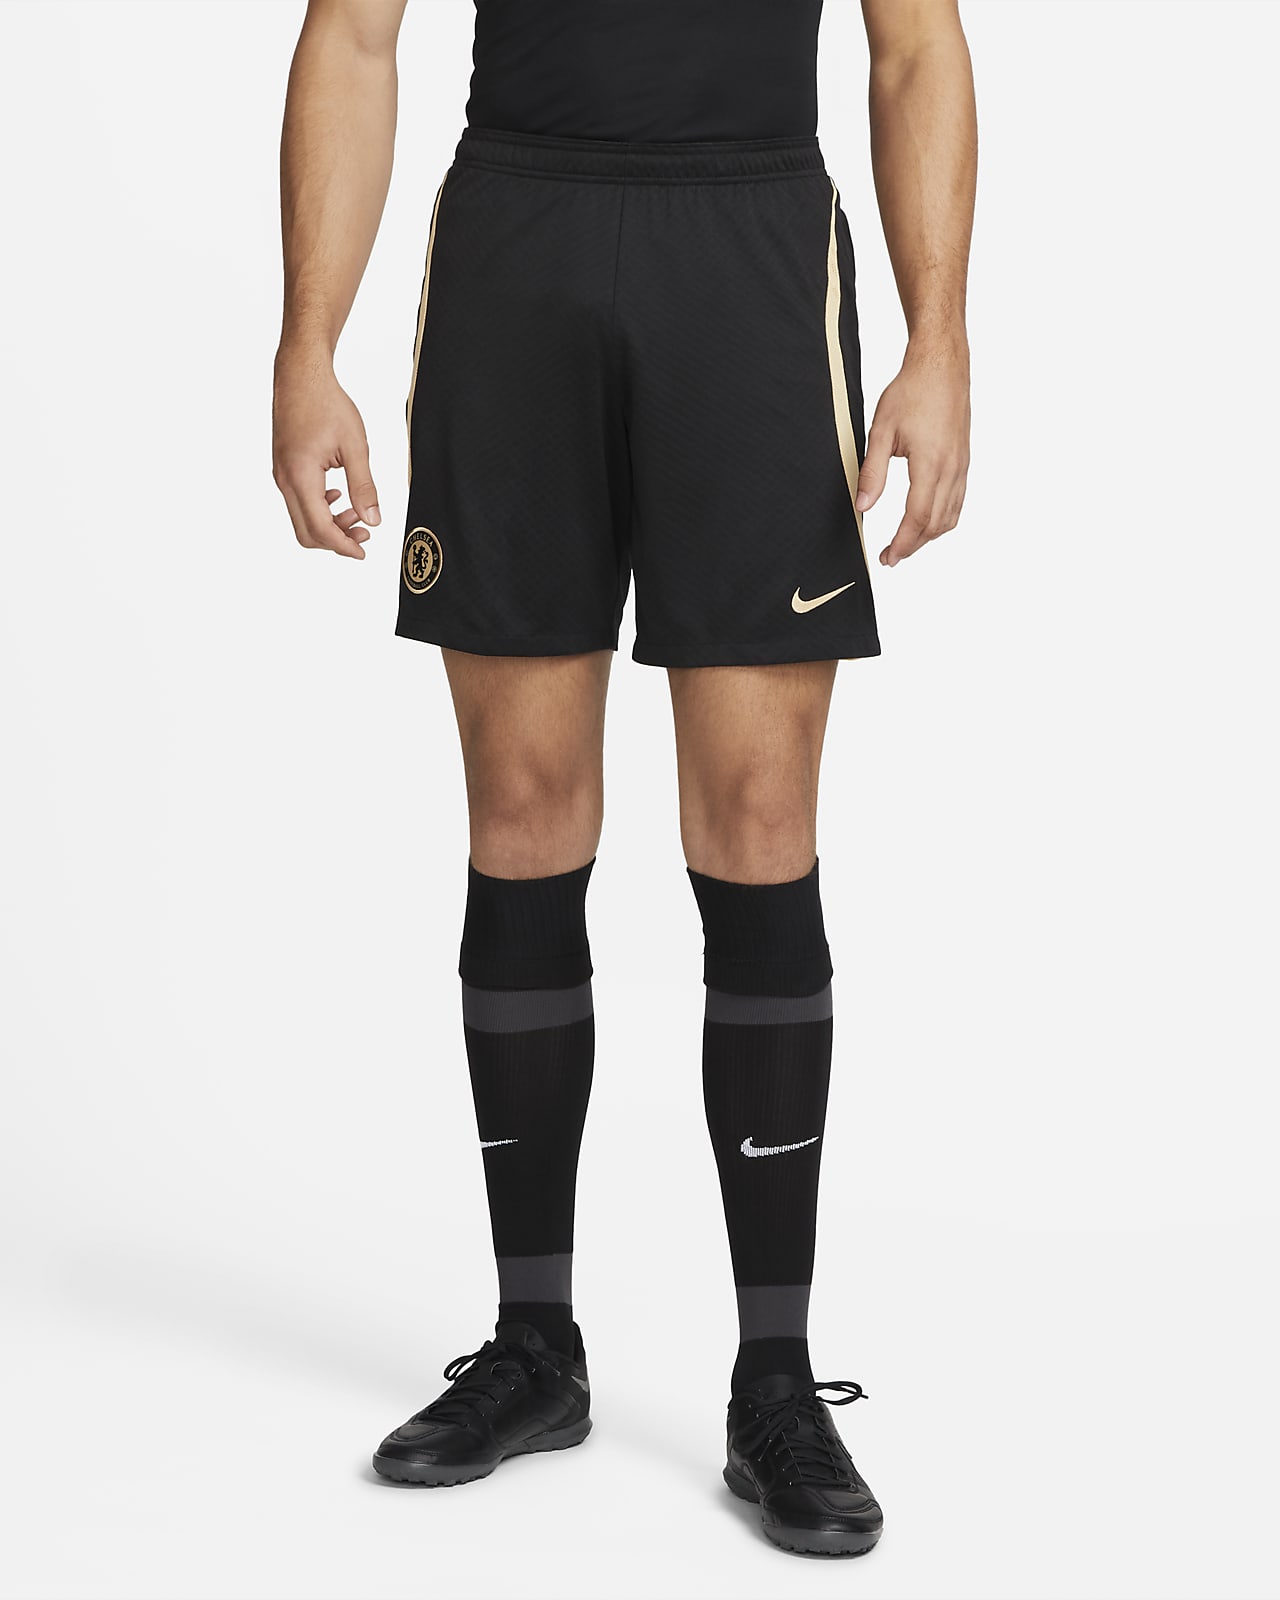 Chelsea FC Strike Men's Nike Dri-FIT Knit Soccer Shorts